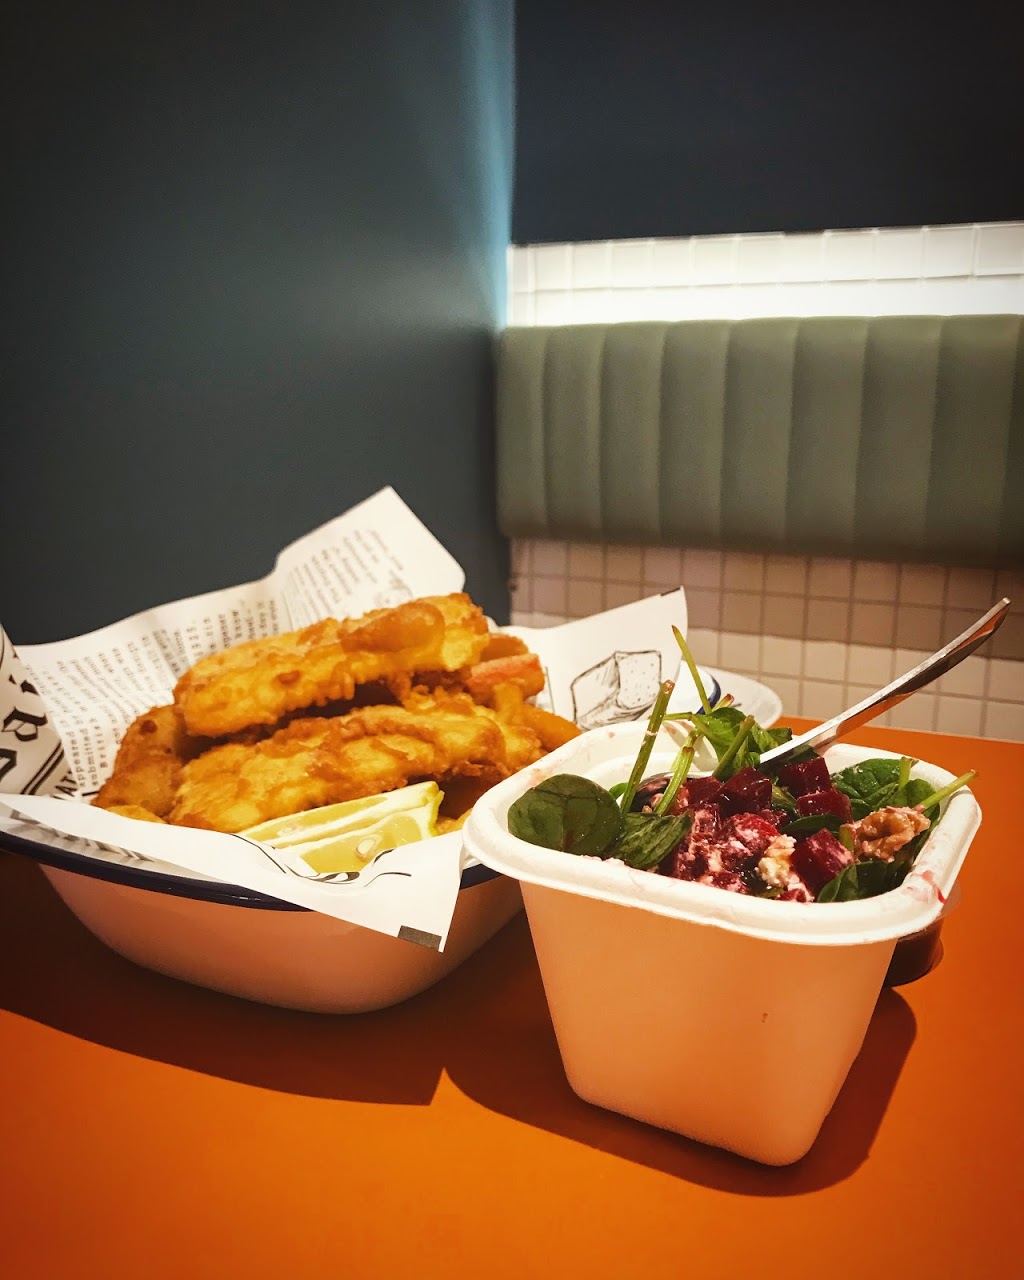 Tankk Gourmet Fish and Chips Como | restaurant | Shop 6/262 Canning Hwy, Como WA 6152, Australia | 0865592001 OR +61 8 6559 2001